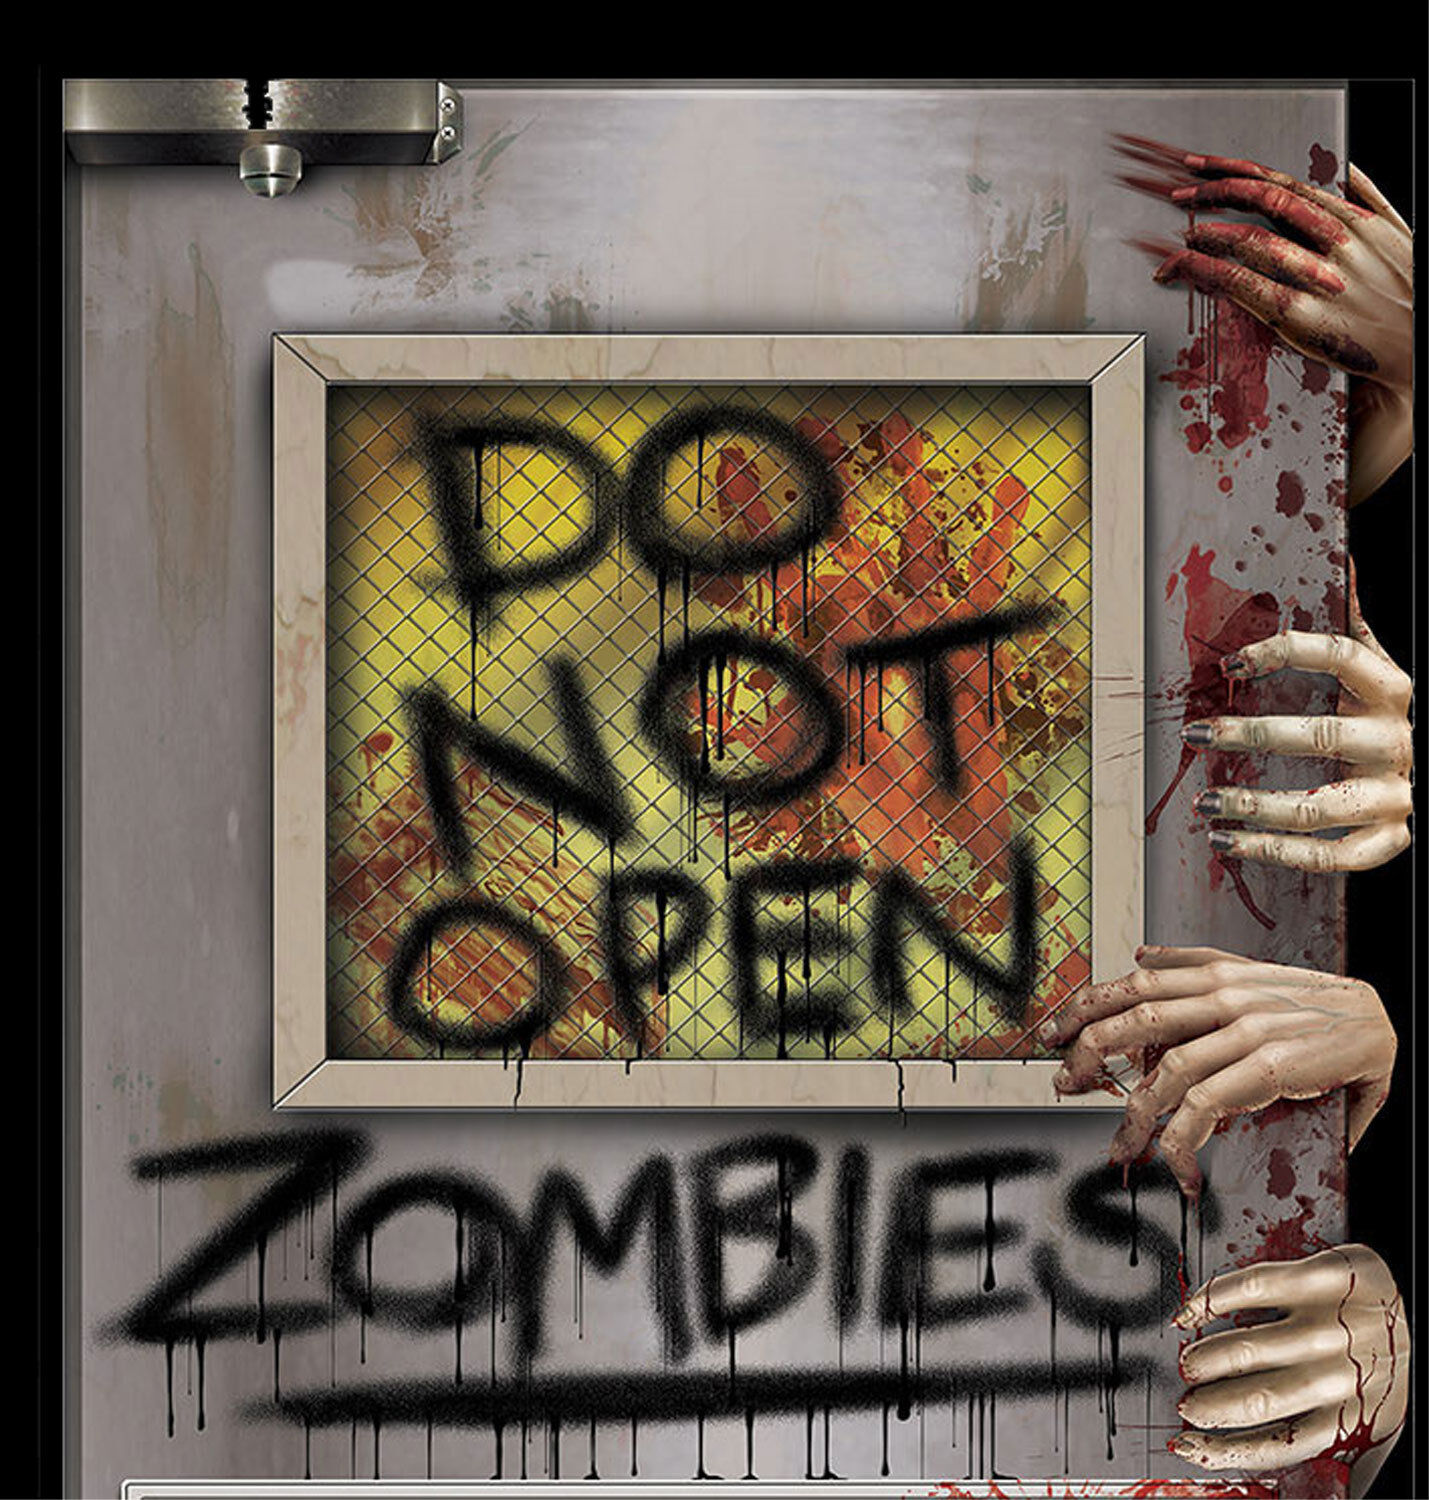 New-Do Not Open-ZOMBIE ATTACK LABORATORY DOOR COVER MURAL Horror Prop Decoration